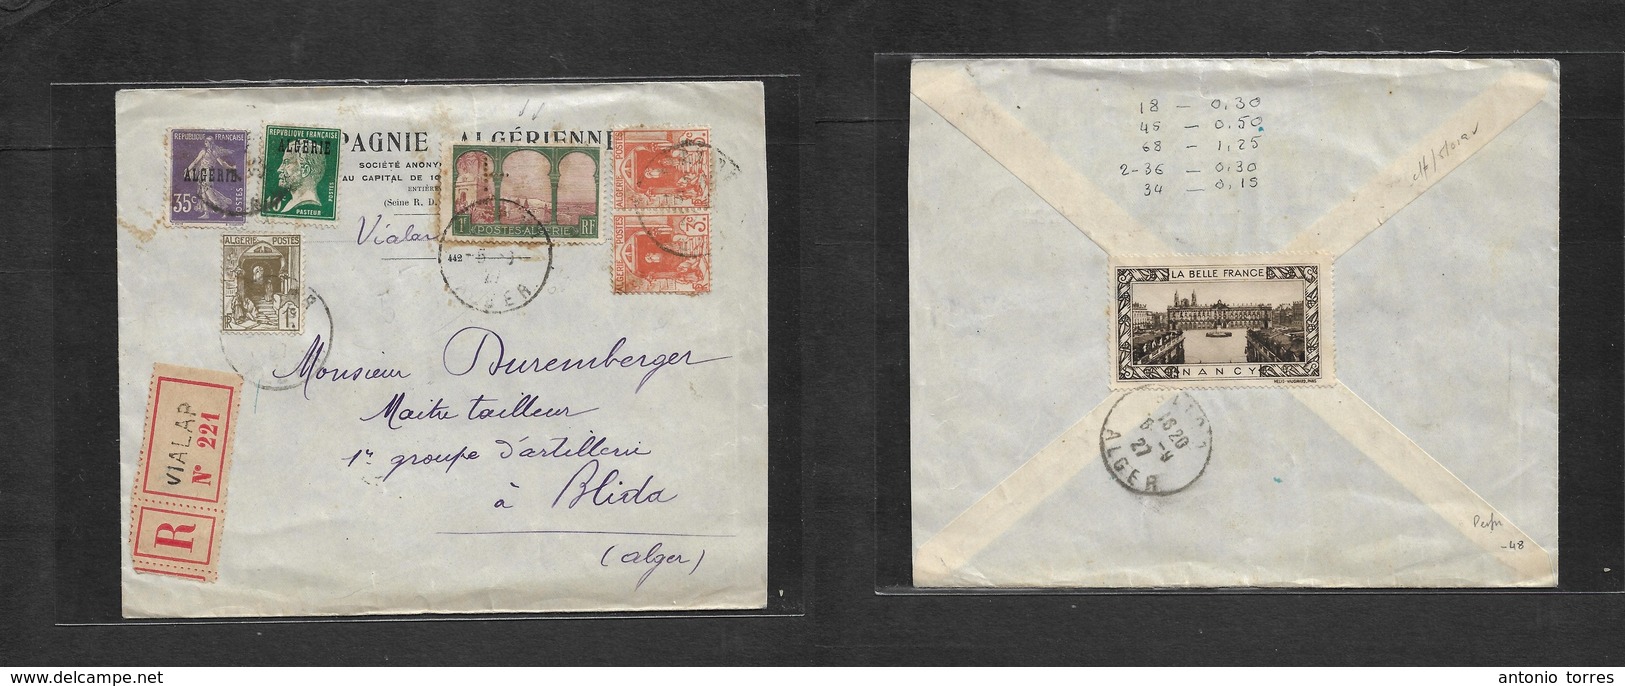 Algeria. 1927 (5 Sept)  Vialap - Blida. PERFIN Stamp Comercial Usage Ovptd Issue + Mixed. Registered Multifkd Envelope.  - Algérie (1962-...)